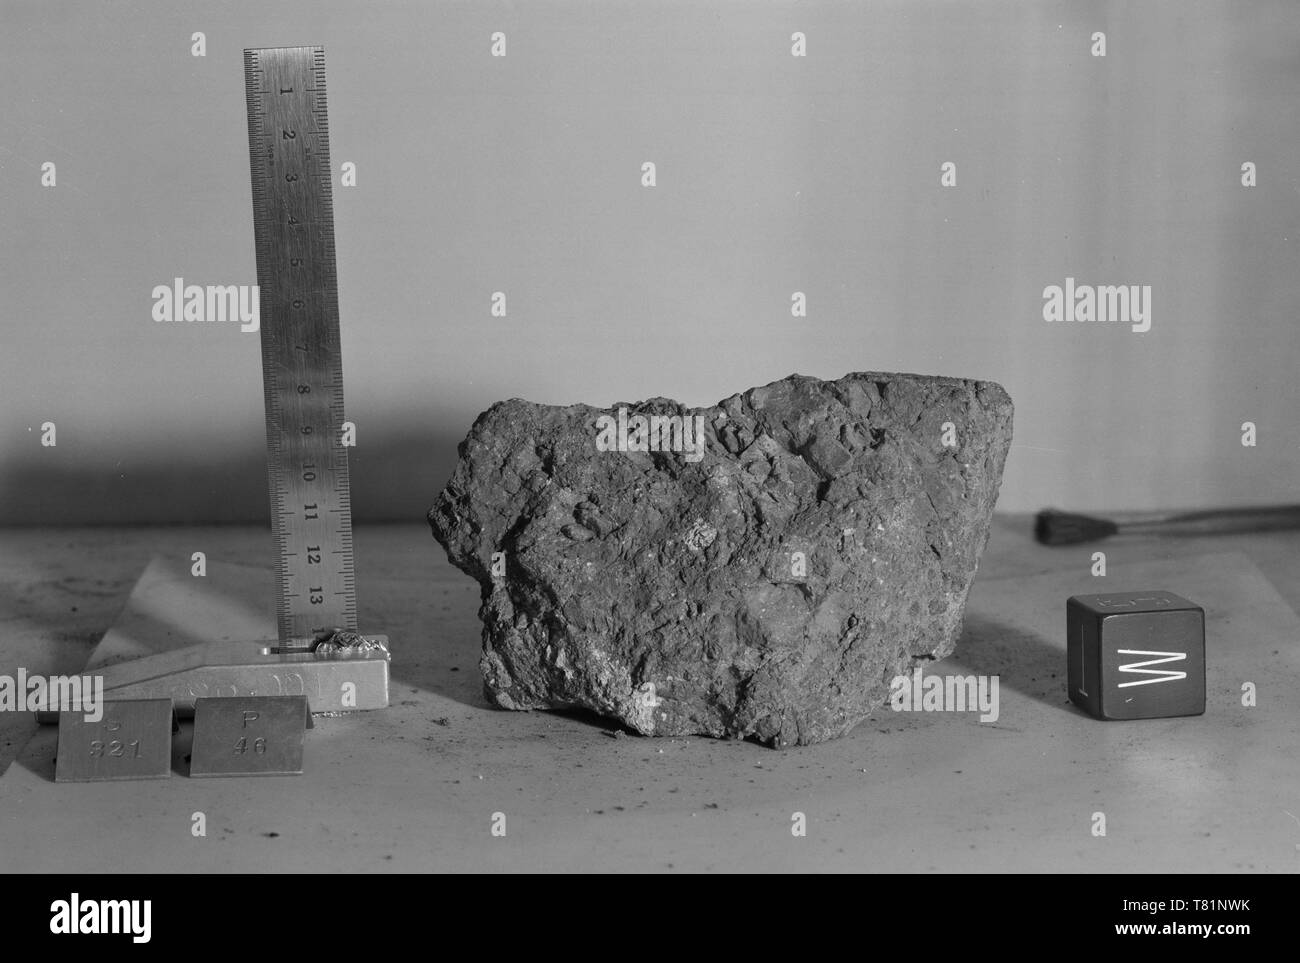 Apollo 14 Moon Rock with Felsite Clast Stock Photo